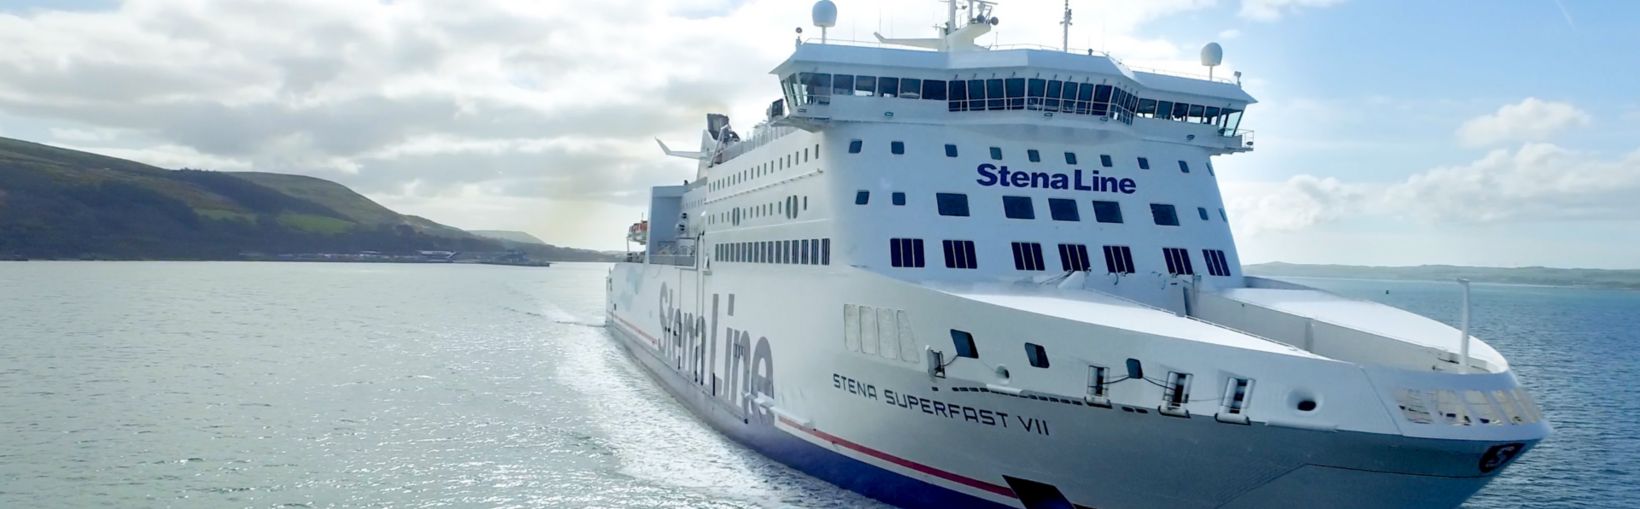 Stena Superfast VII veerboot op zee